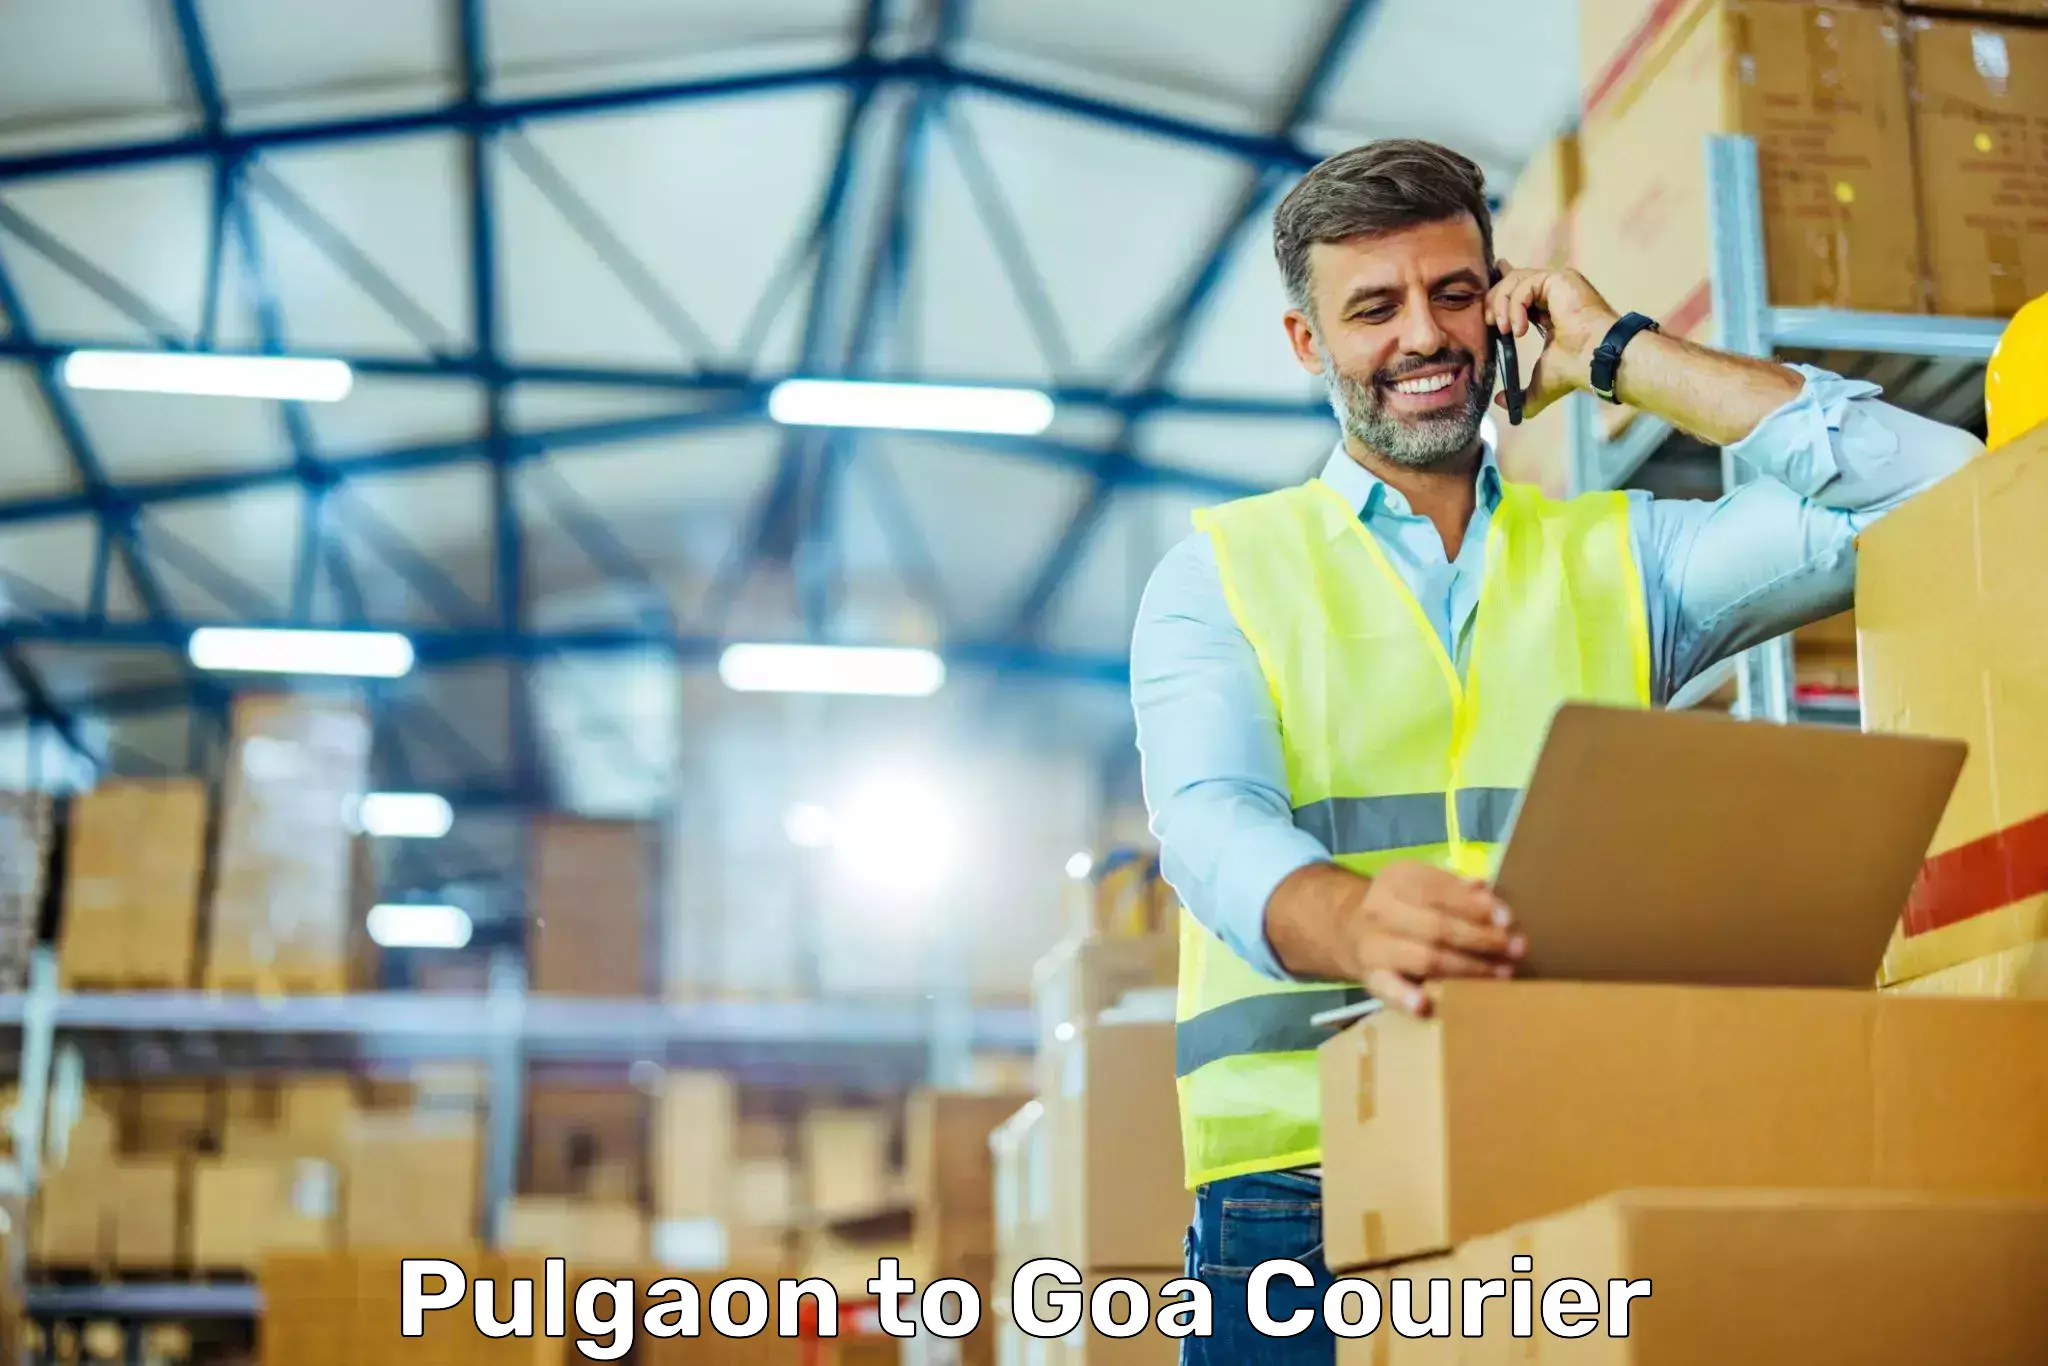 Courier service innovation Pulgaon to Panaji